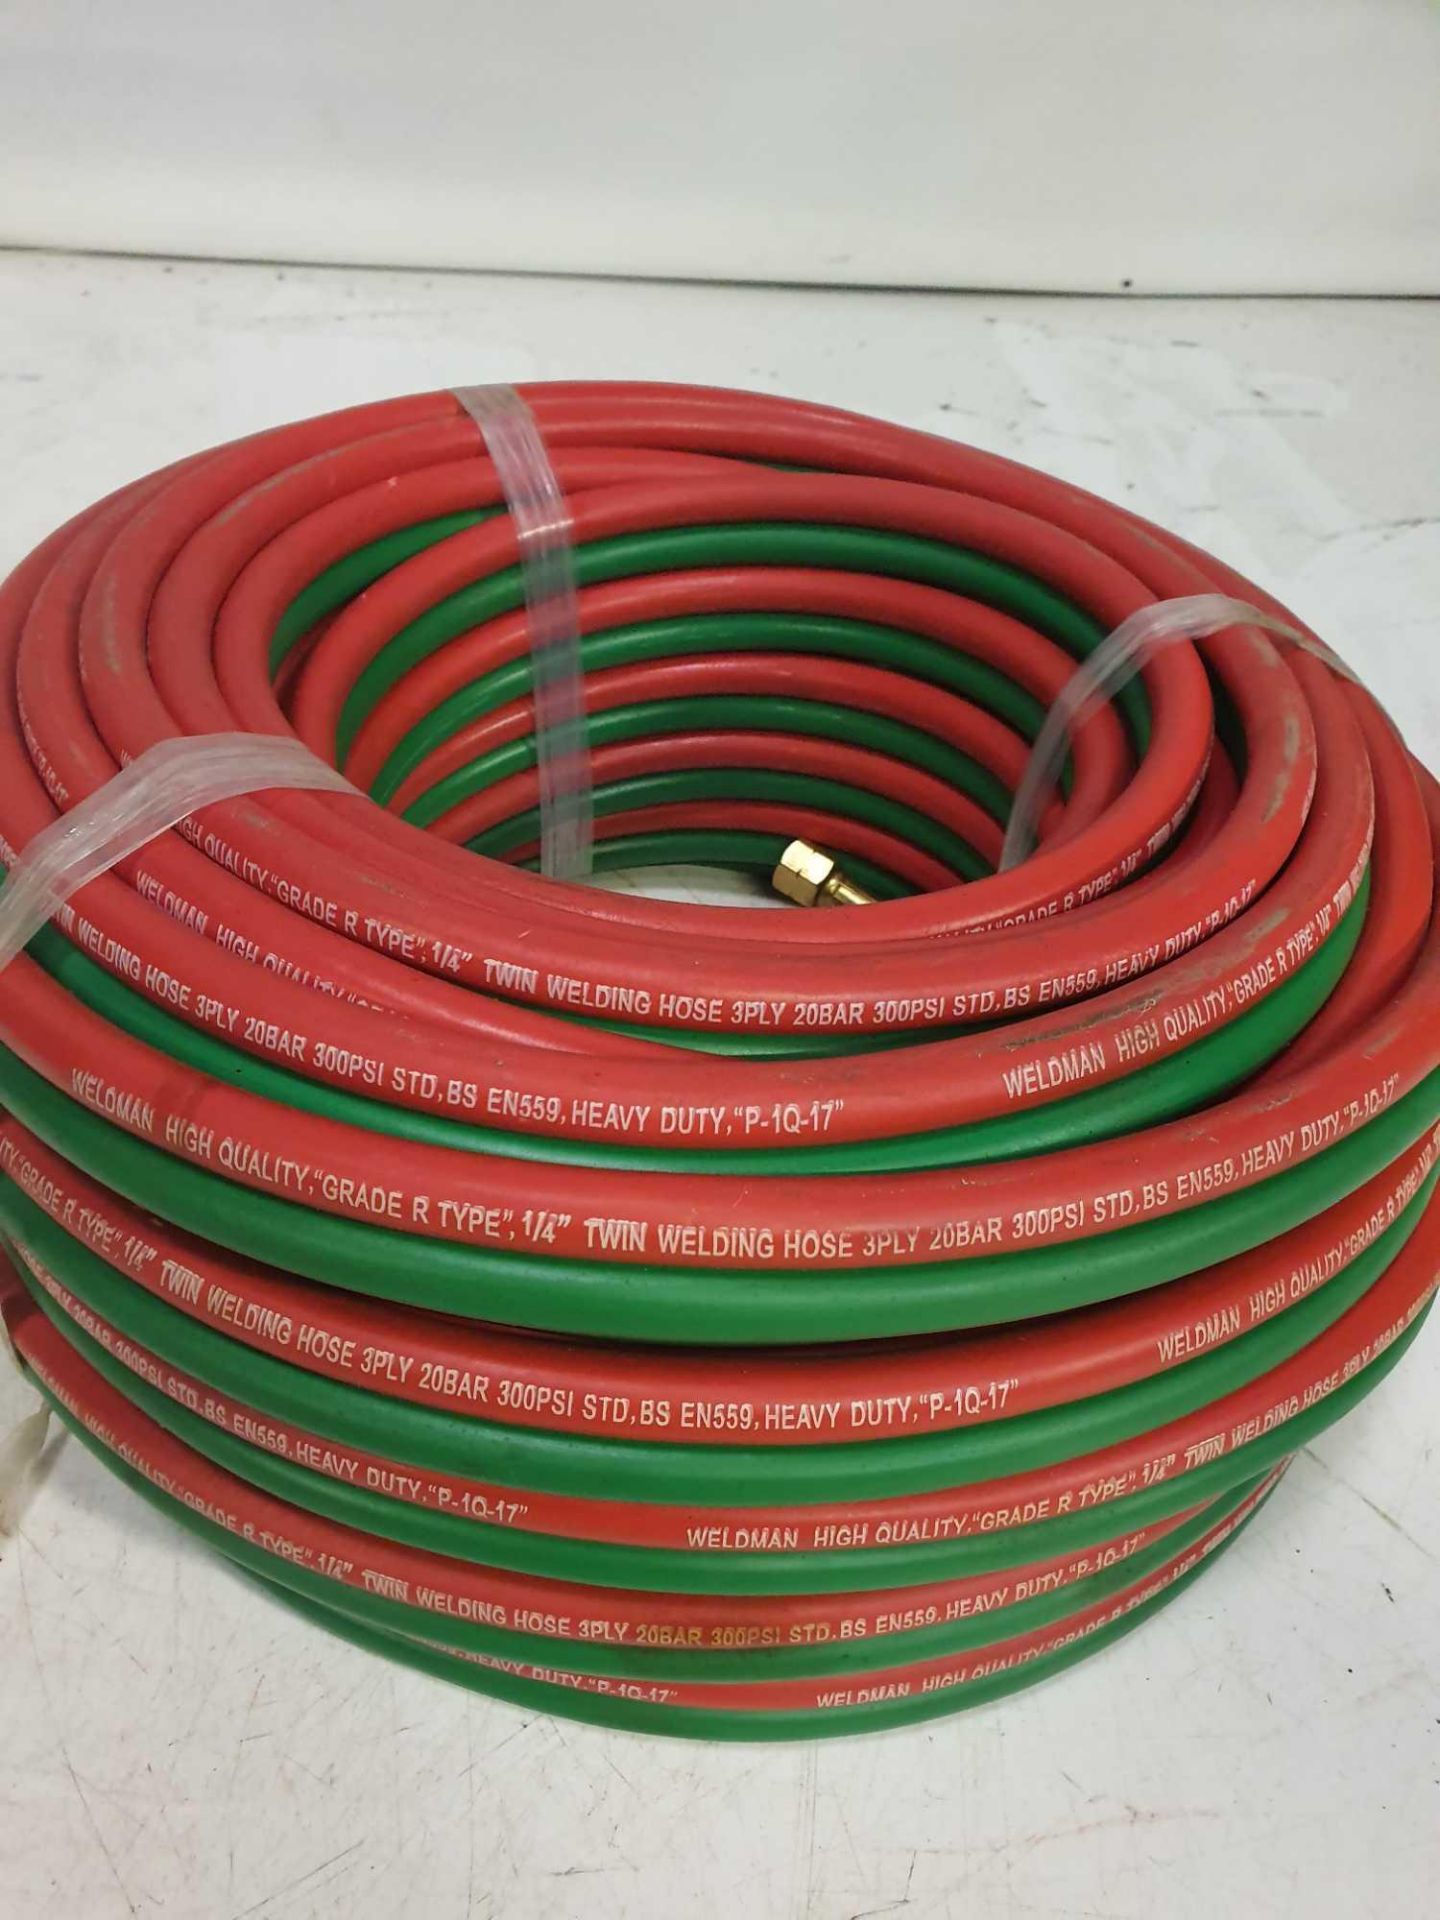 Weldman gas hose